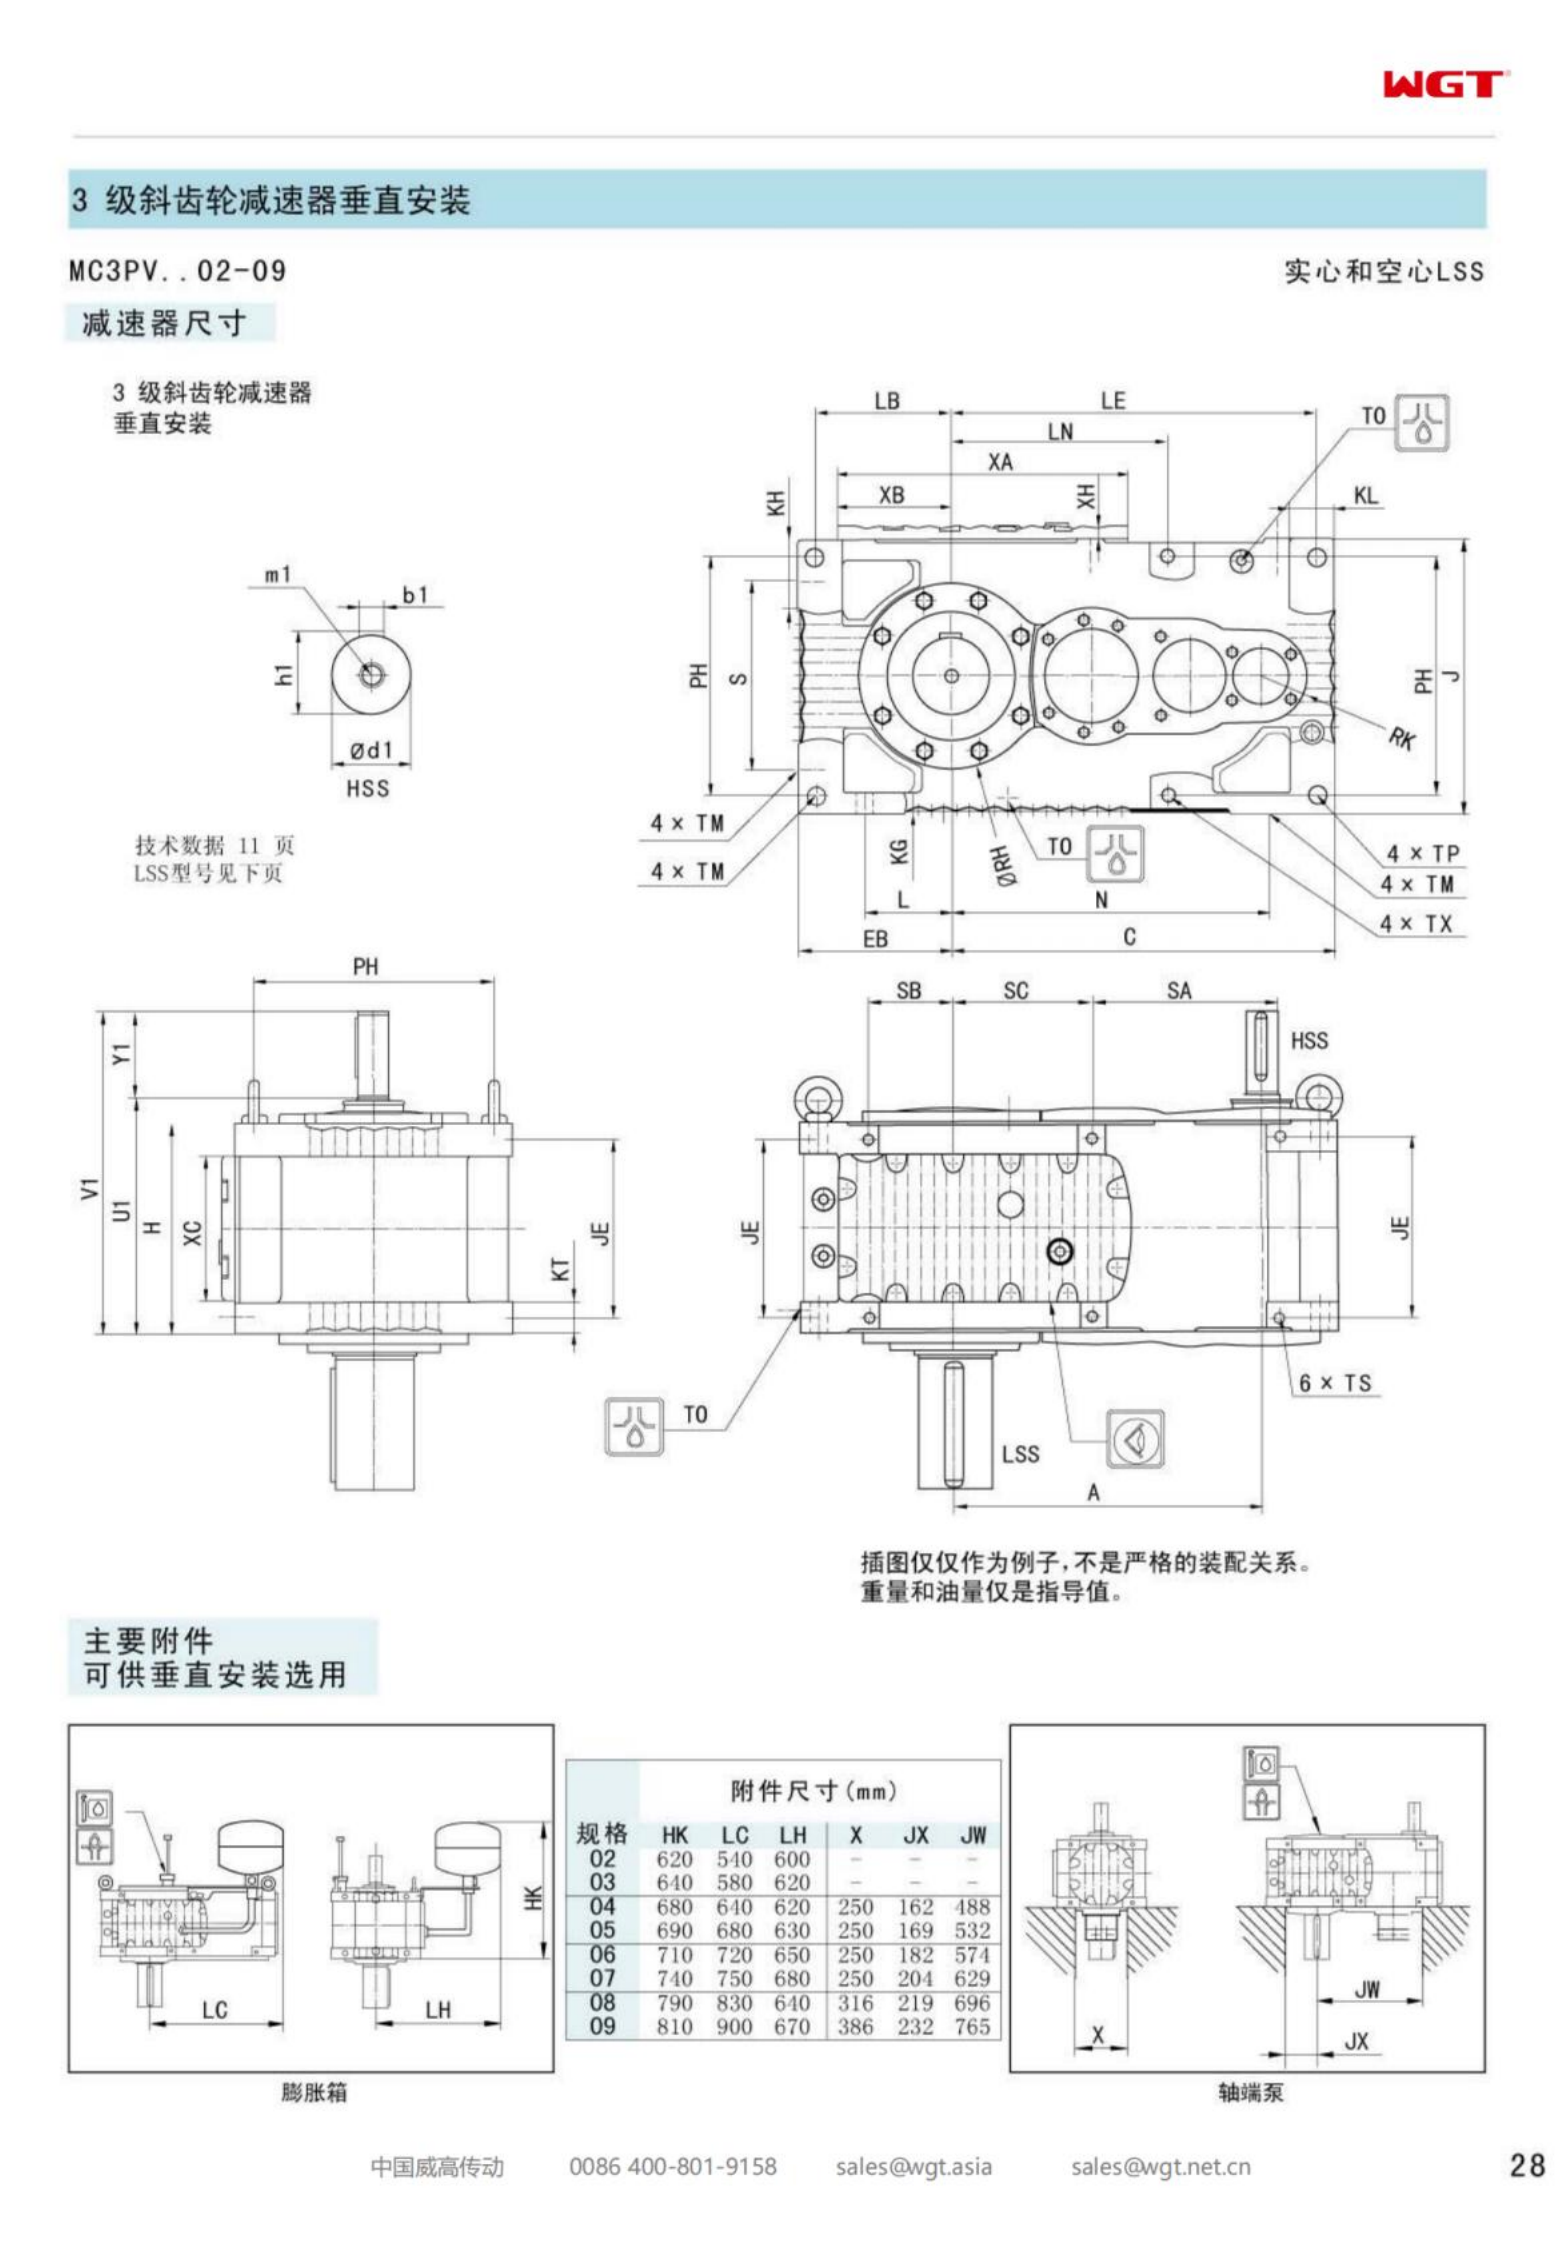 MC3PVSF06 replaces _SEW_MC_Series gearbox (patent)